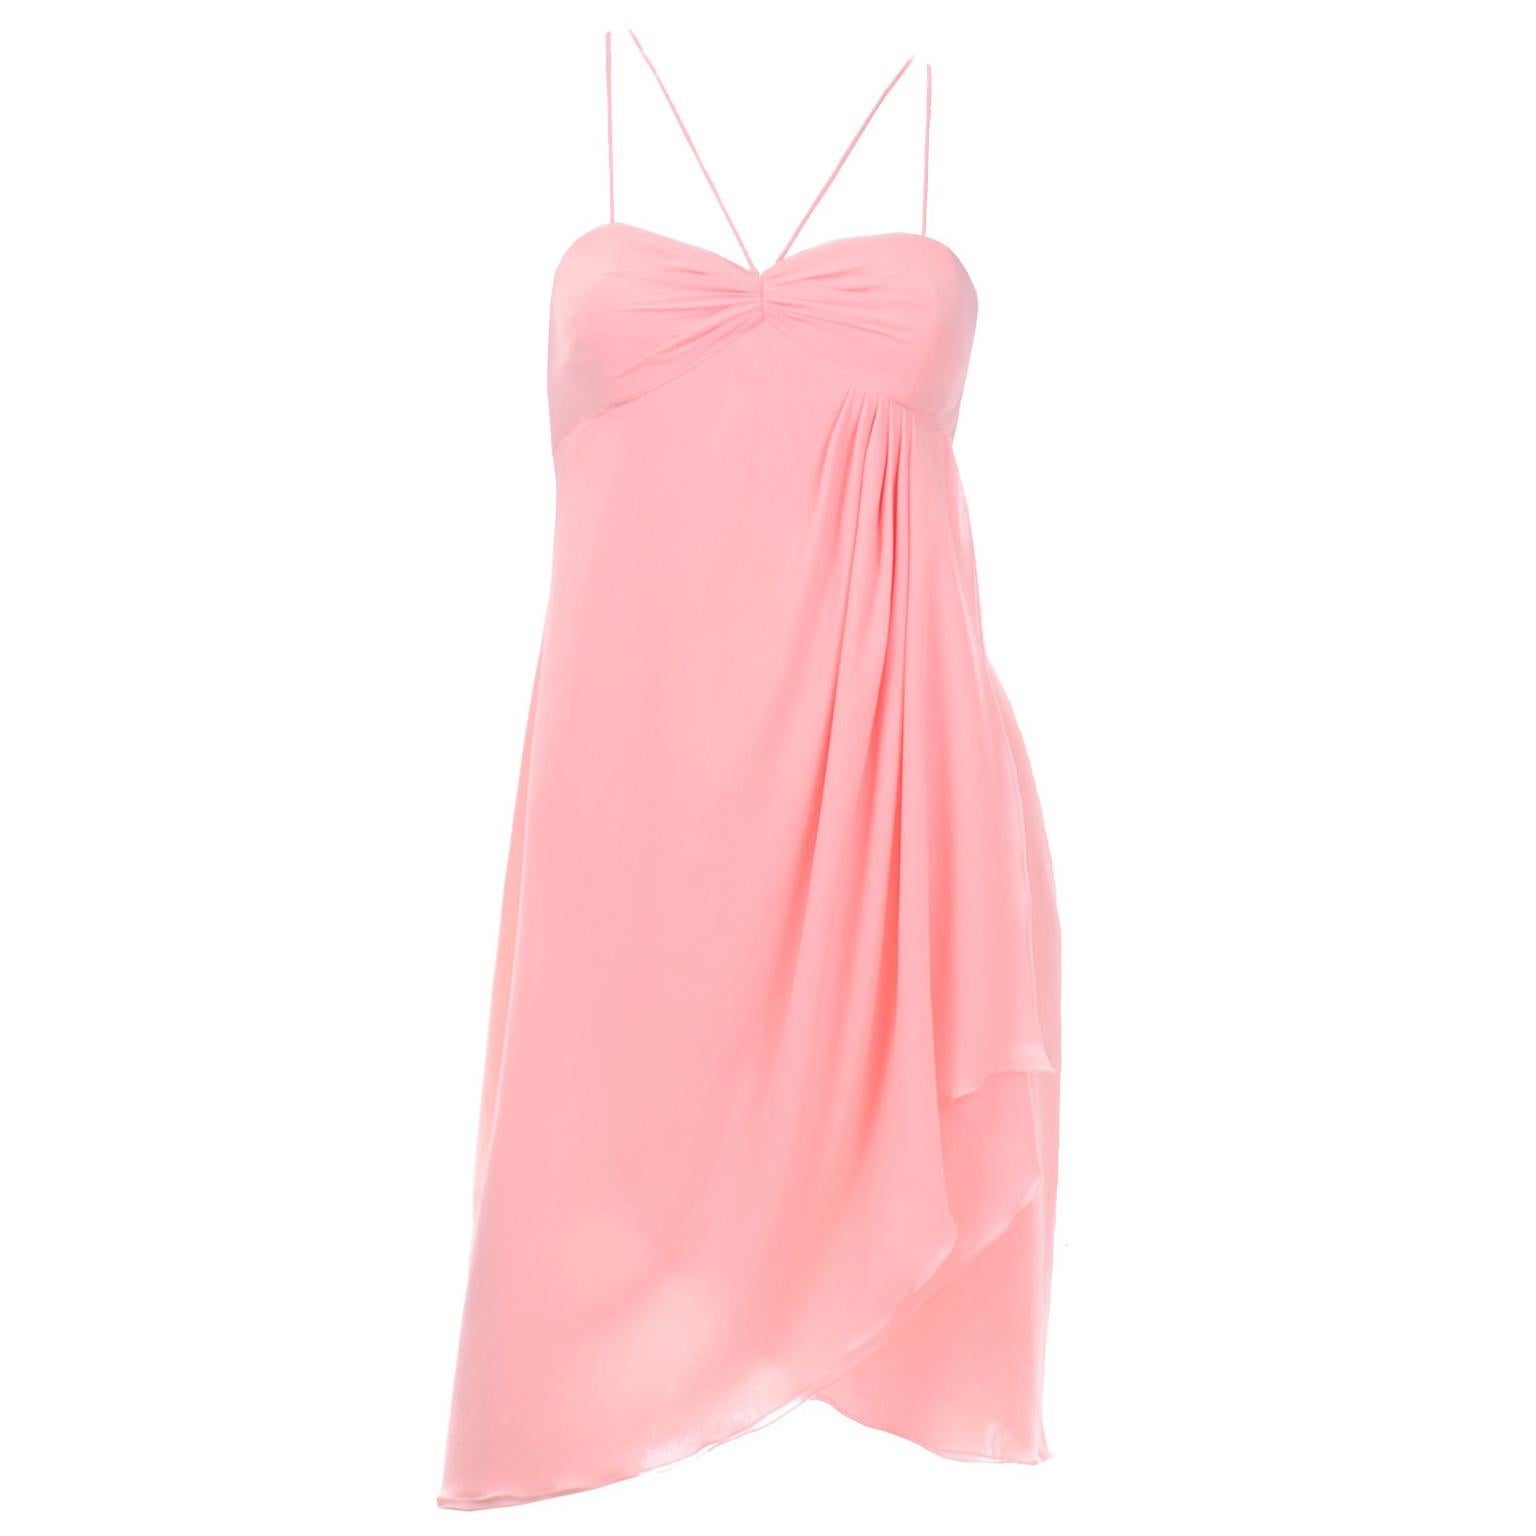 Emanuel Ungaro Parallele Pink Silk Chiffon Vintage Cocktail Evening Dress For Sale